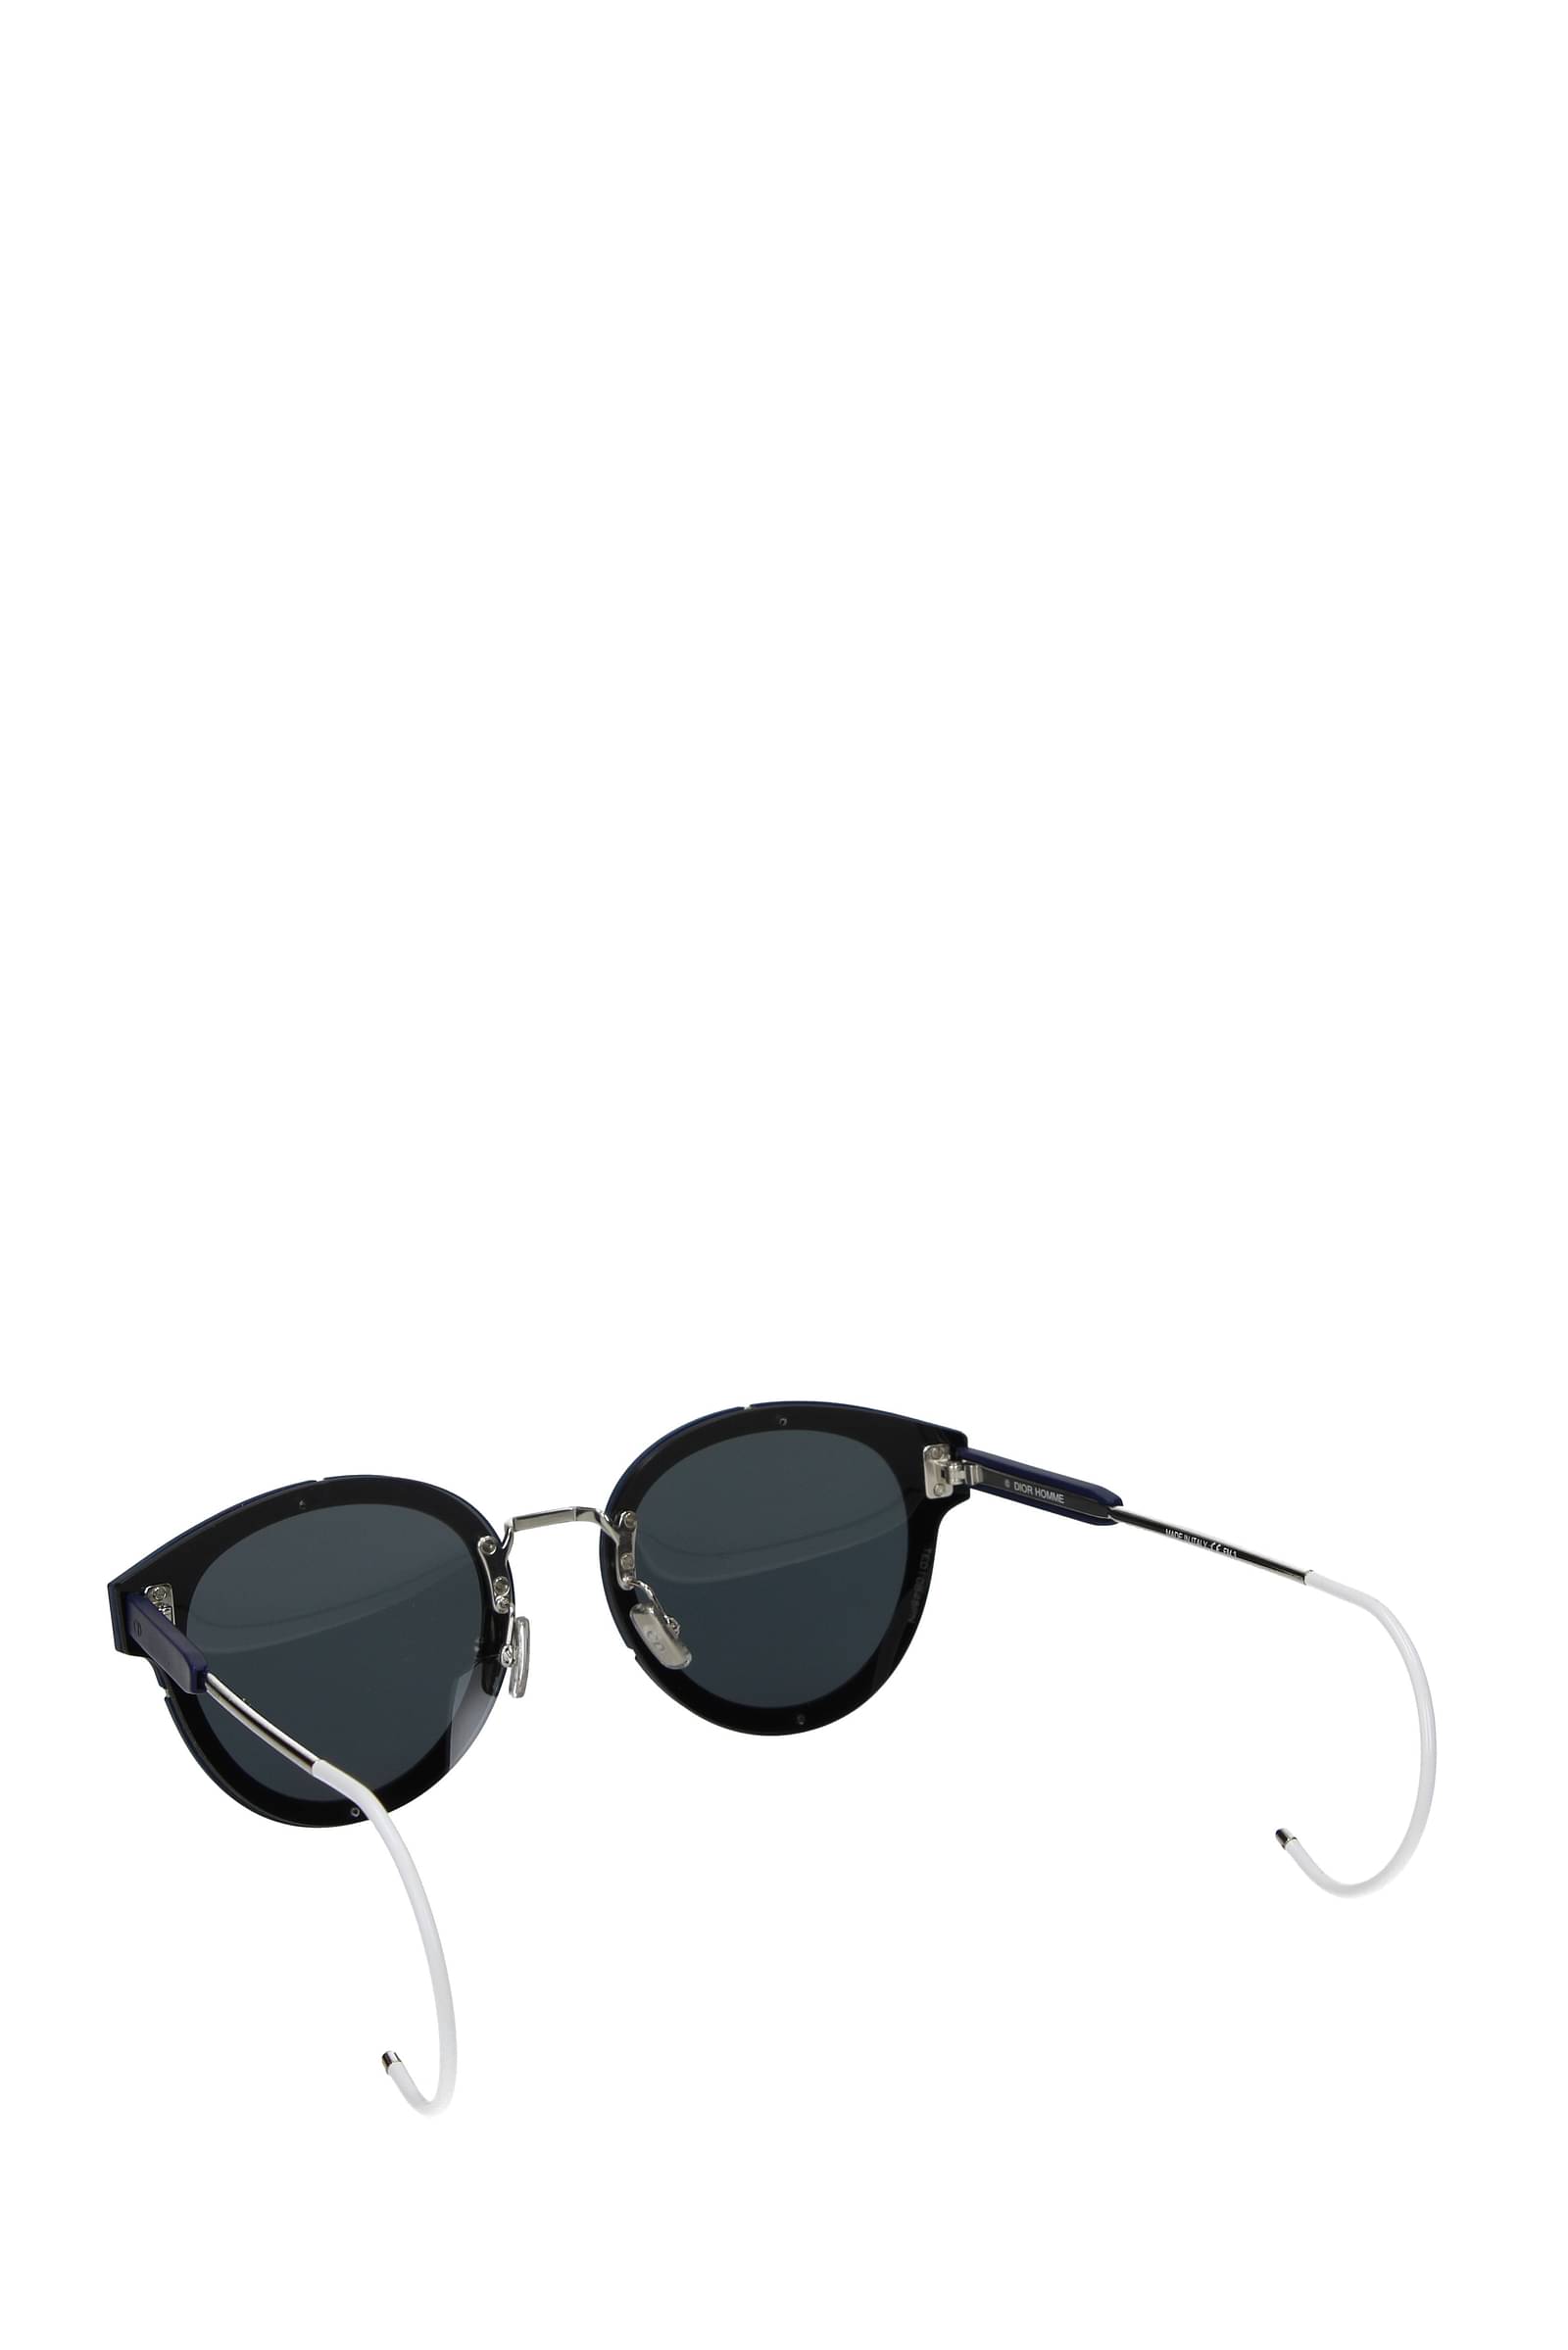 Sunglasses Rubber Blue White - Christian Dior - Men